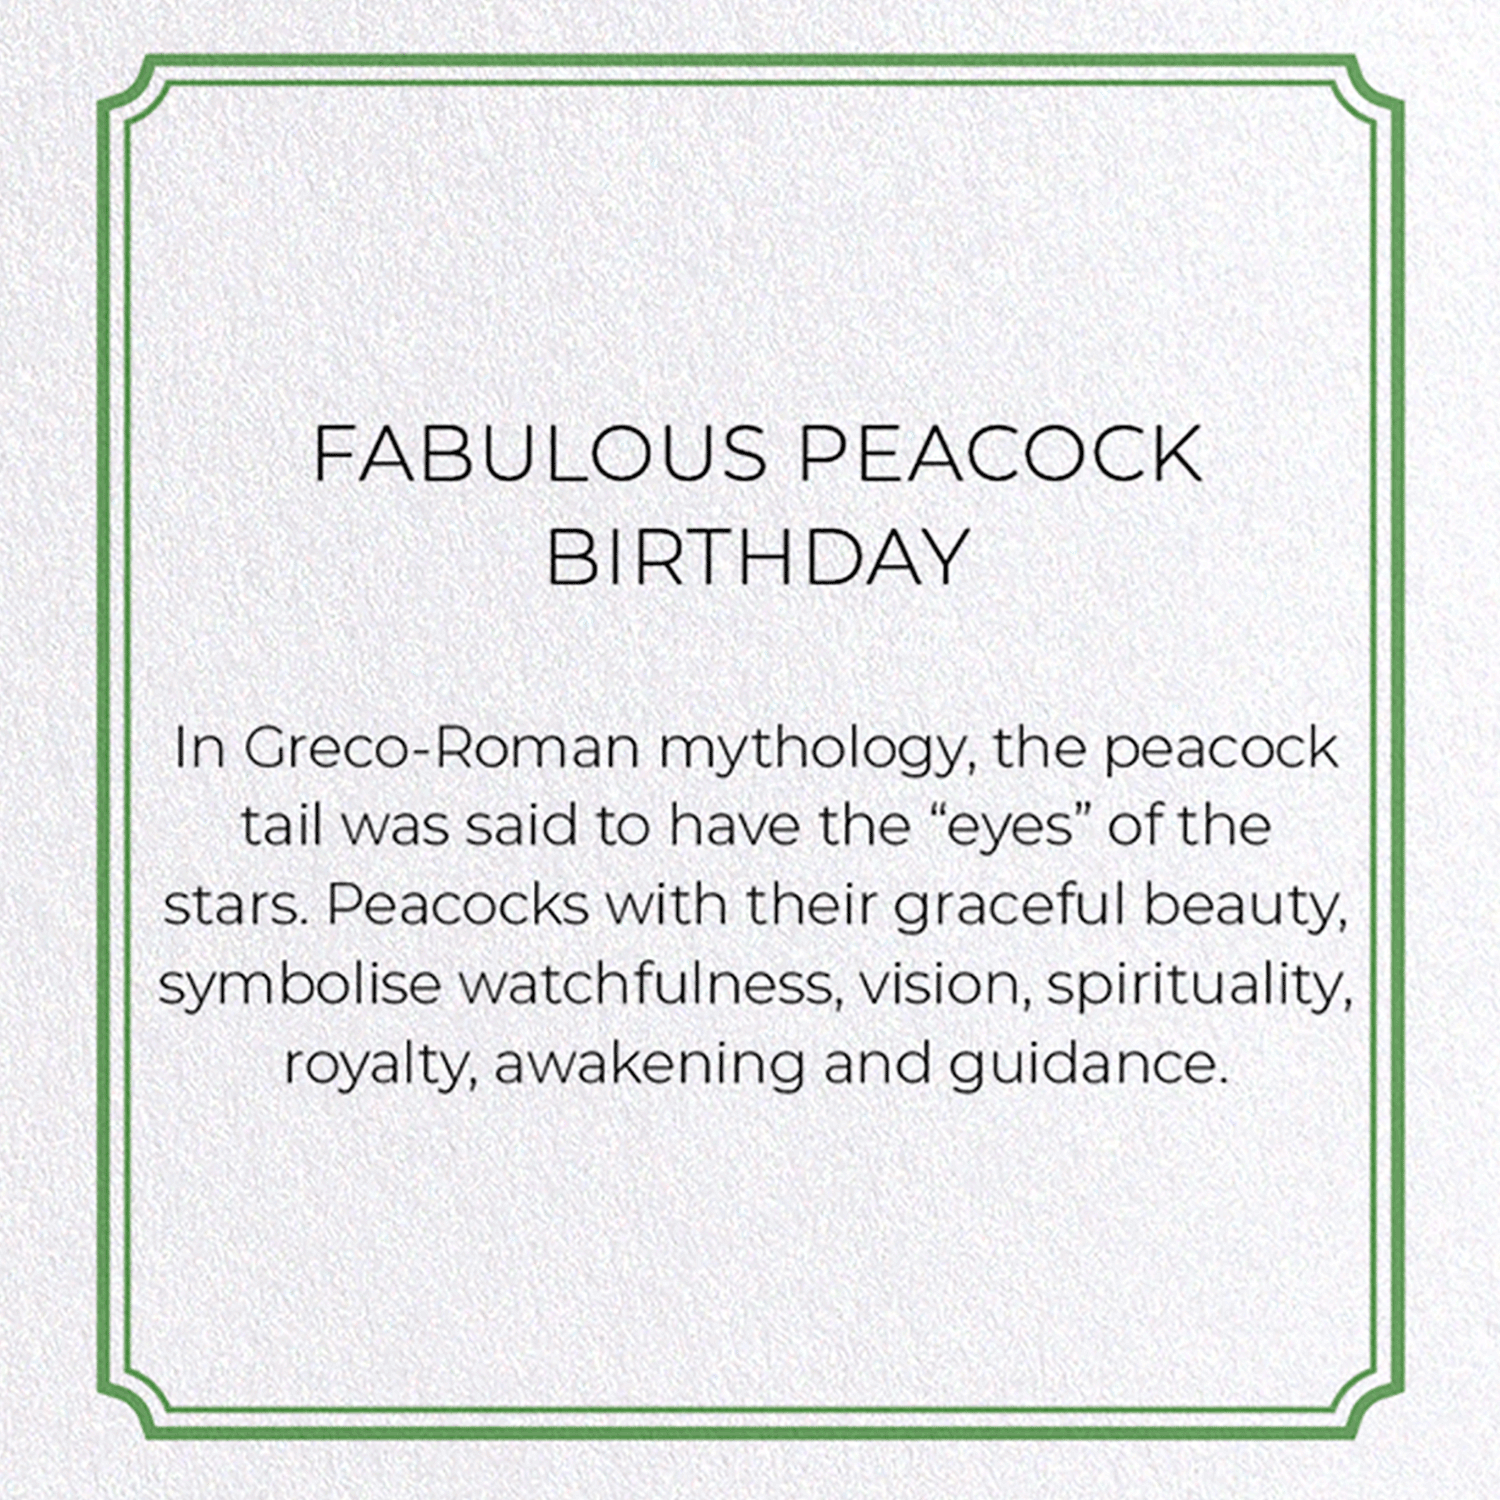 FABULOUS PEACOCK BIRTHDAY